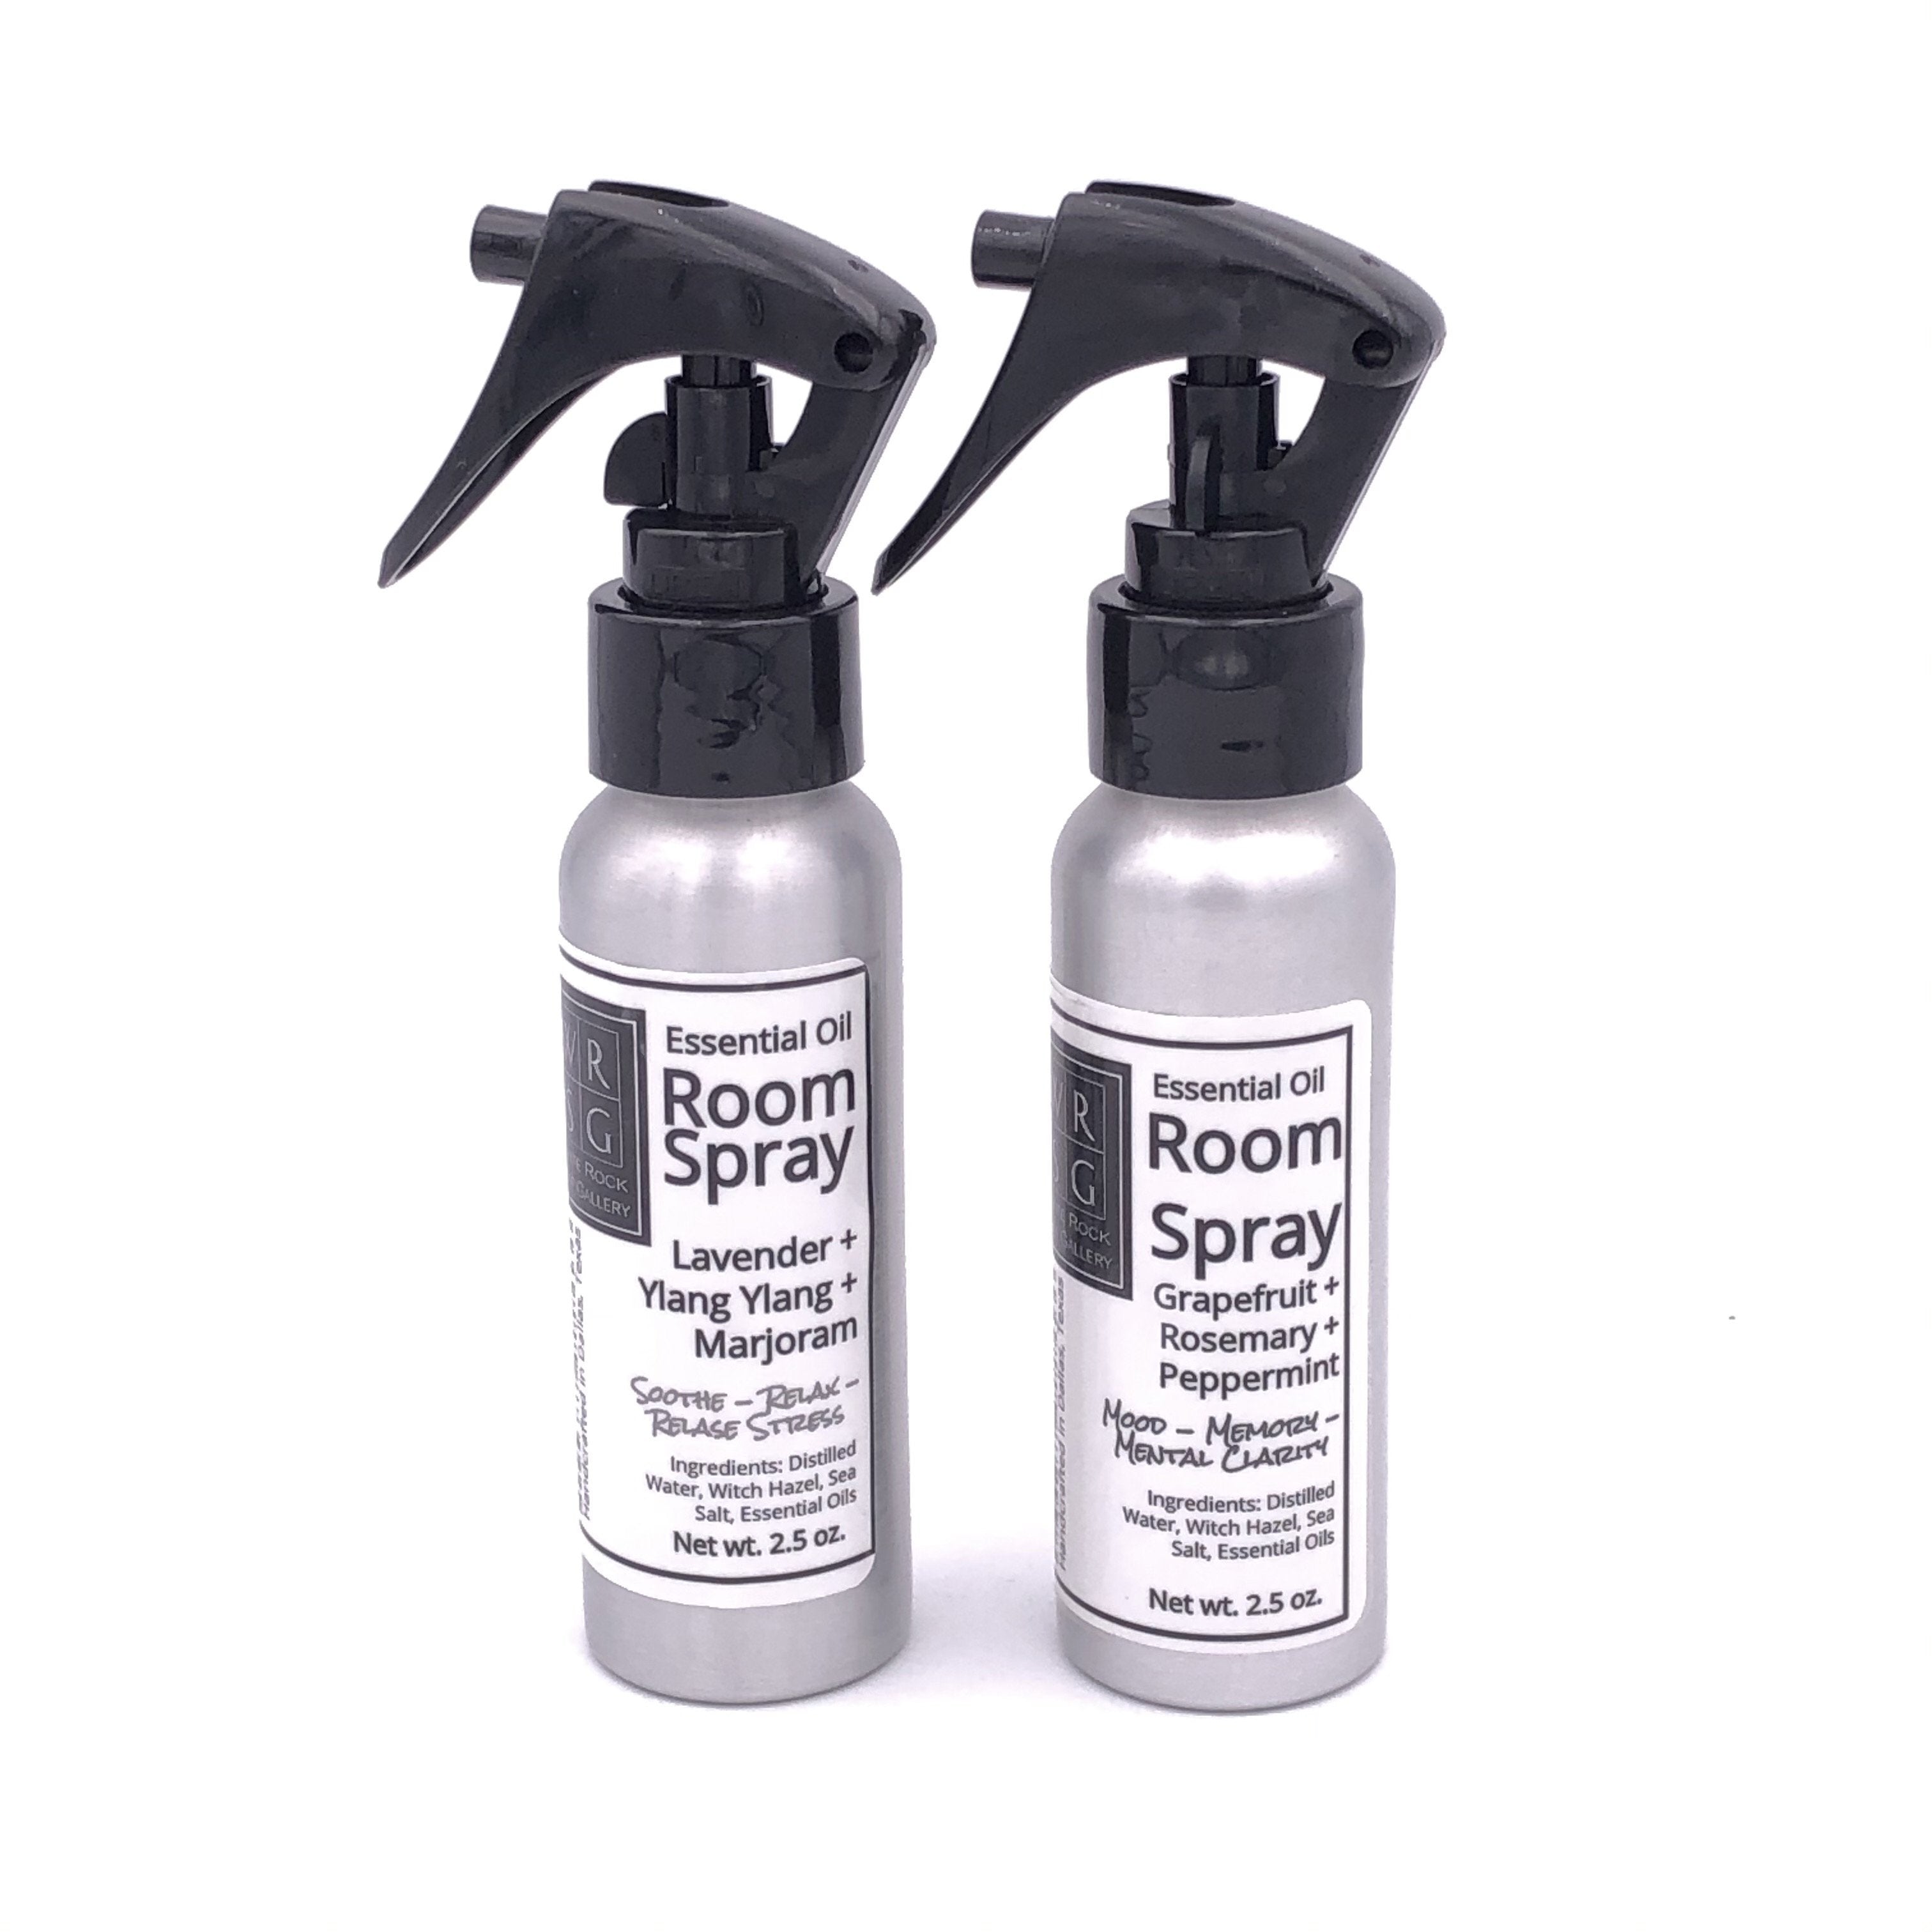 Essential Oil Room Spray